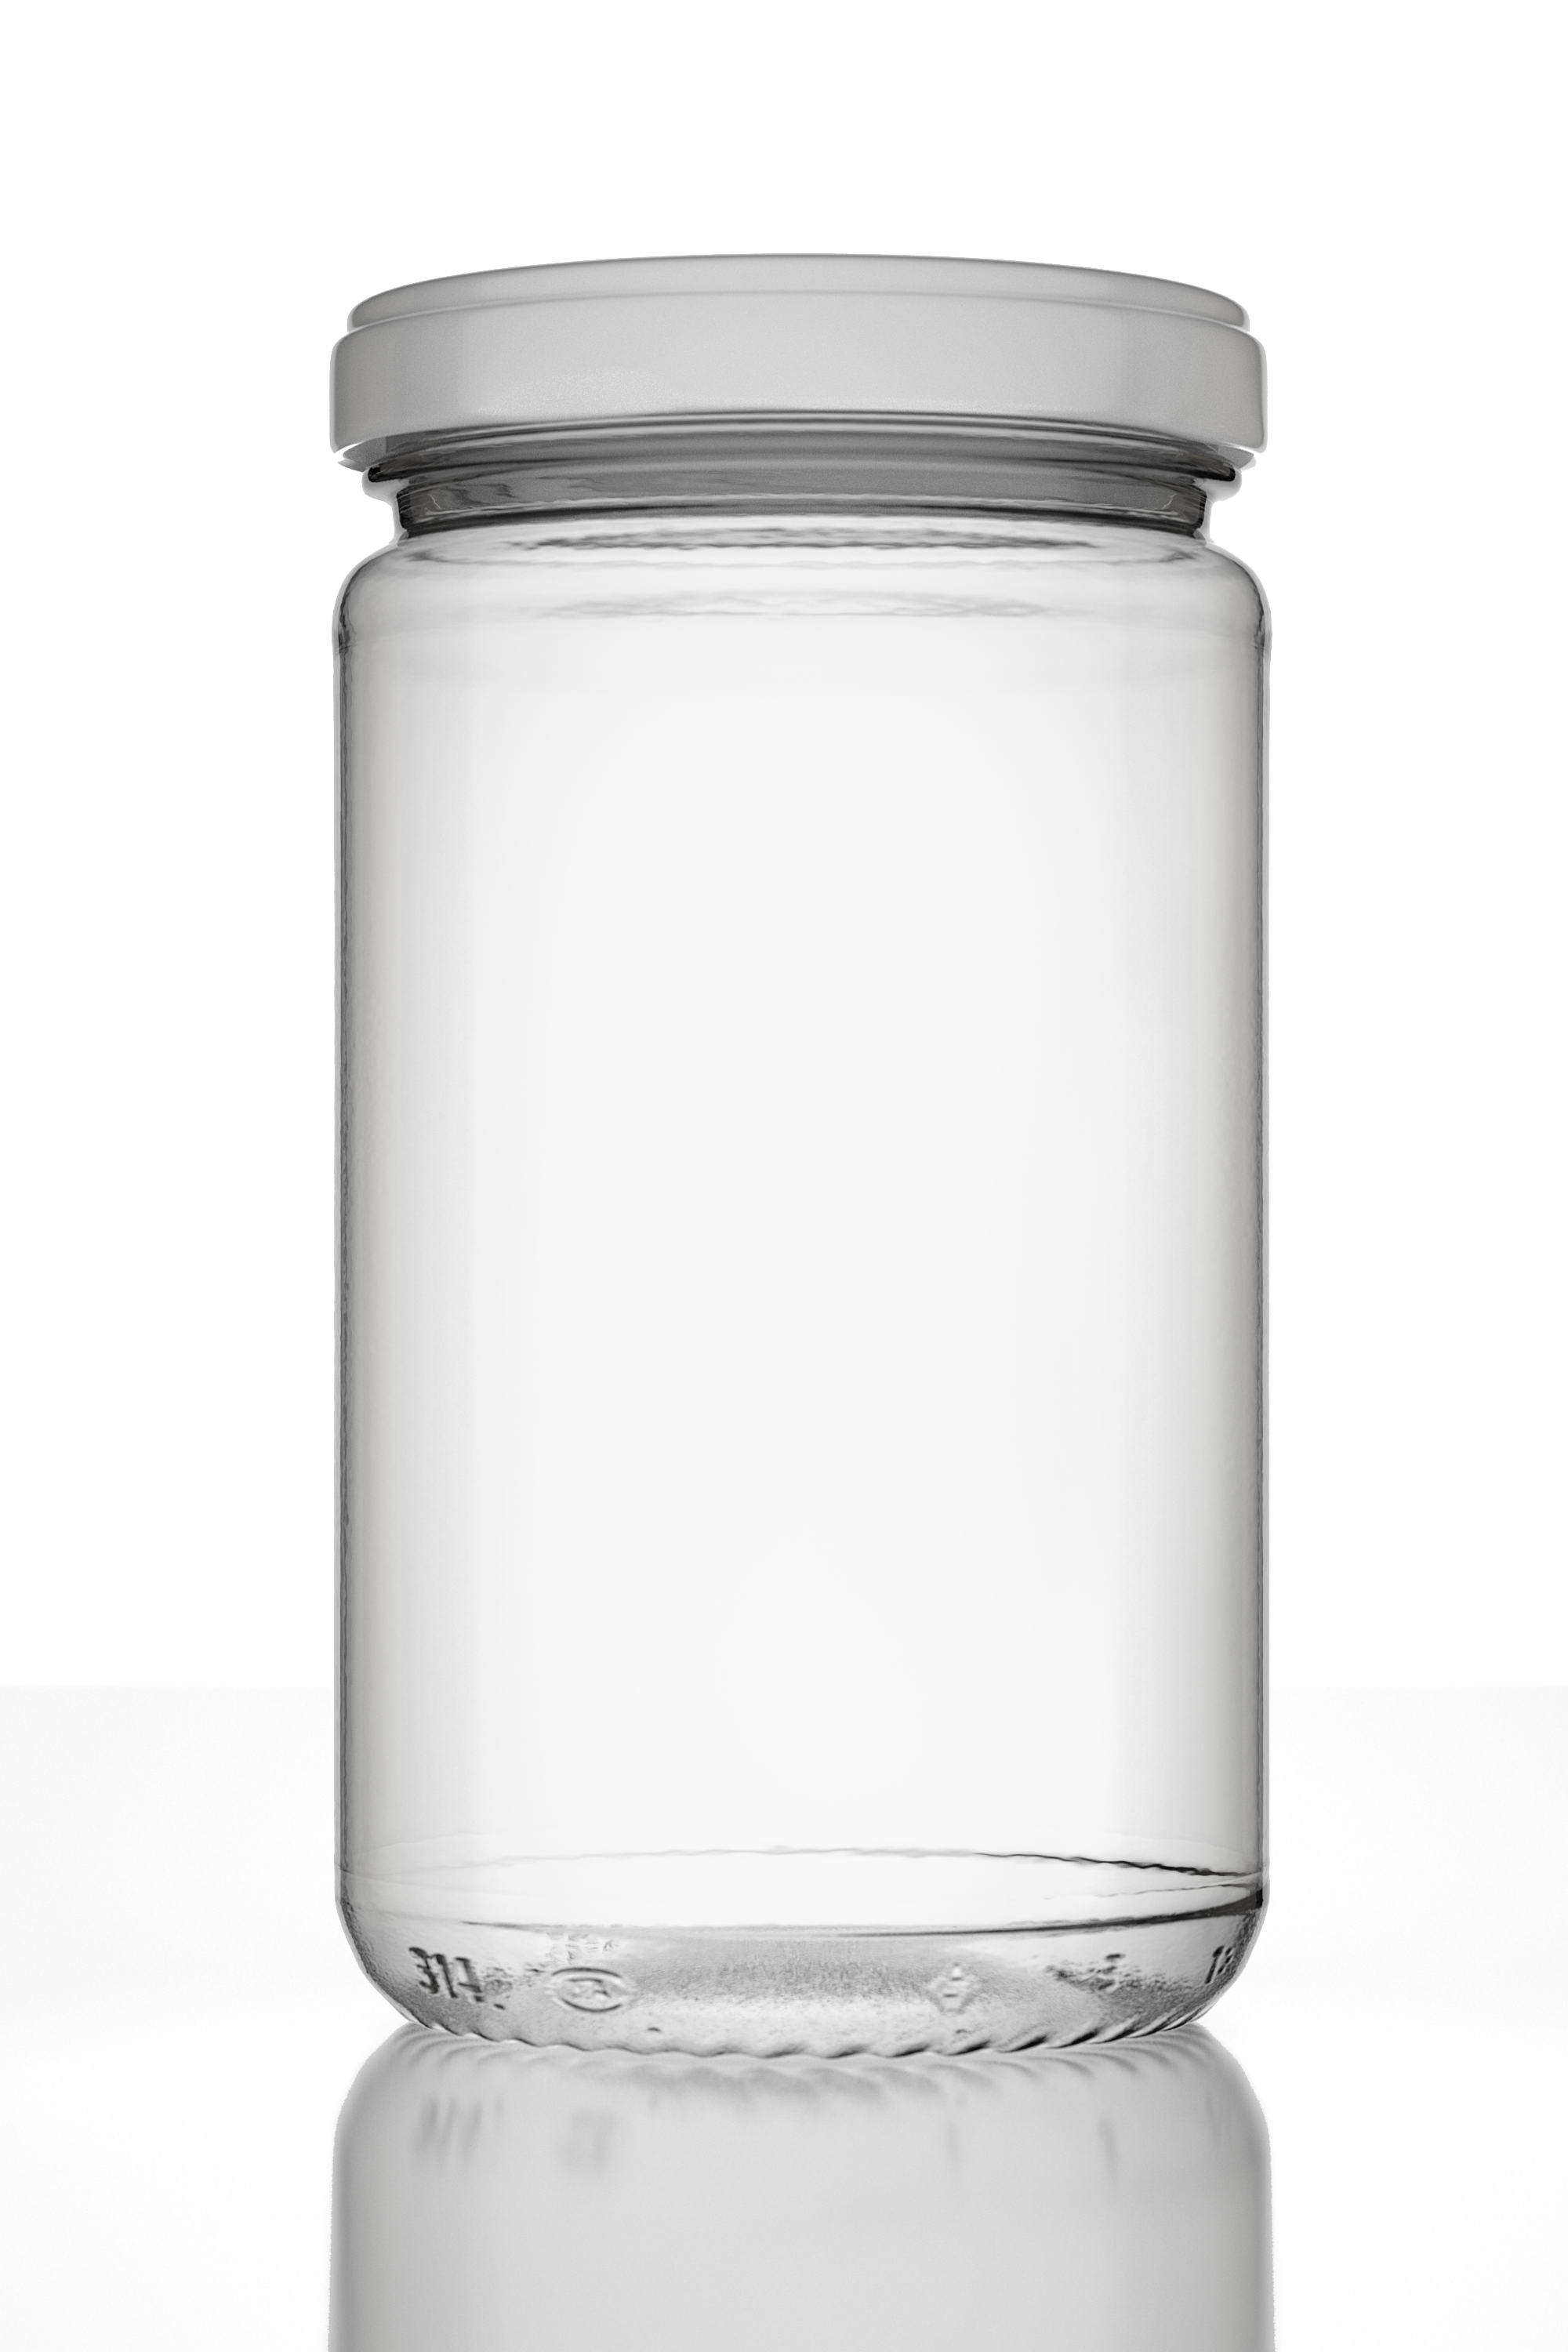 PNG Glass Jar Transparent Glass Jar.PNG Images. | PlusPNG